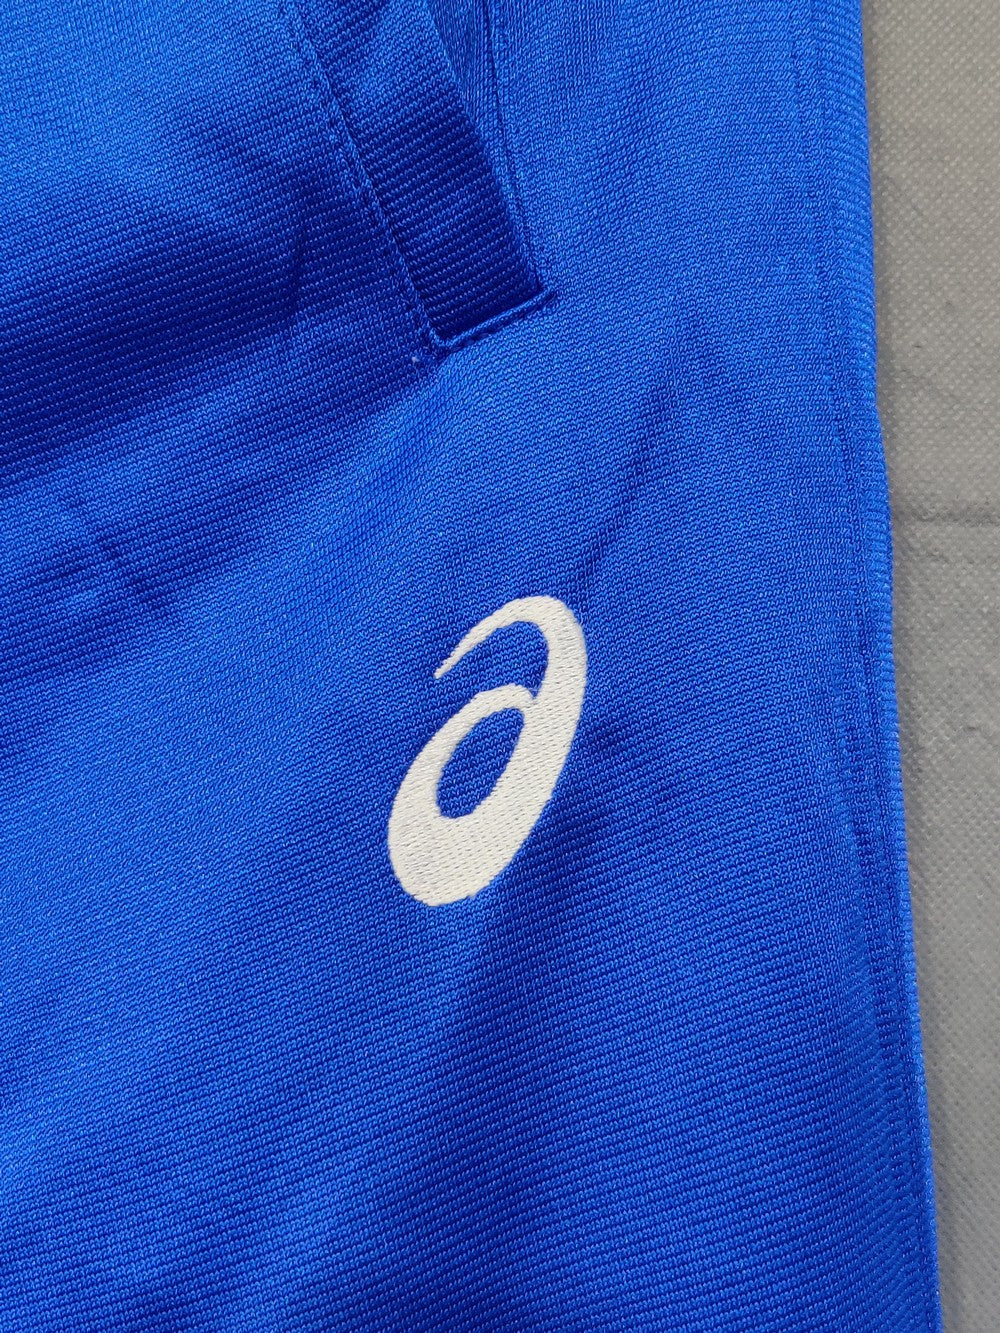 Asics Branded Original Polyester For Men Tracksuits